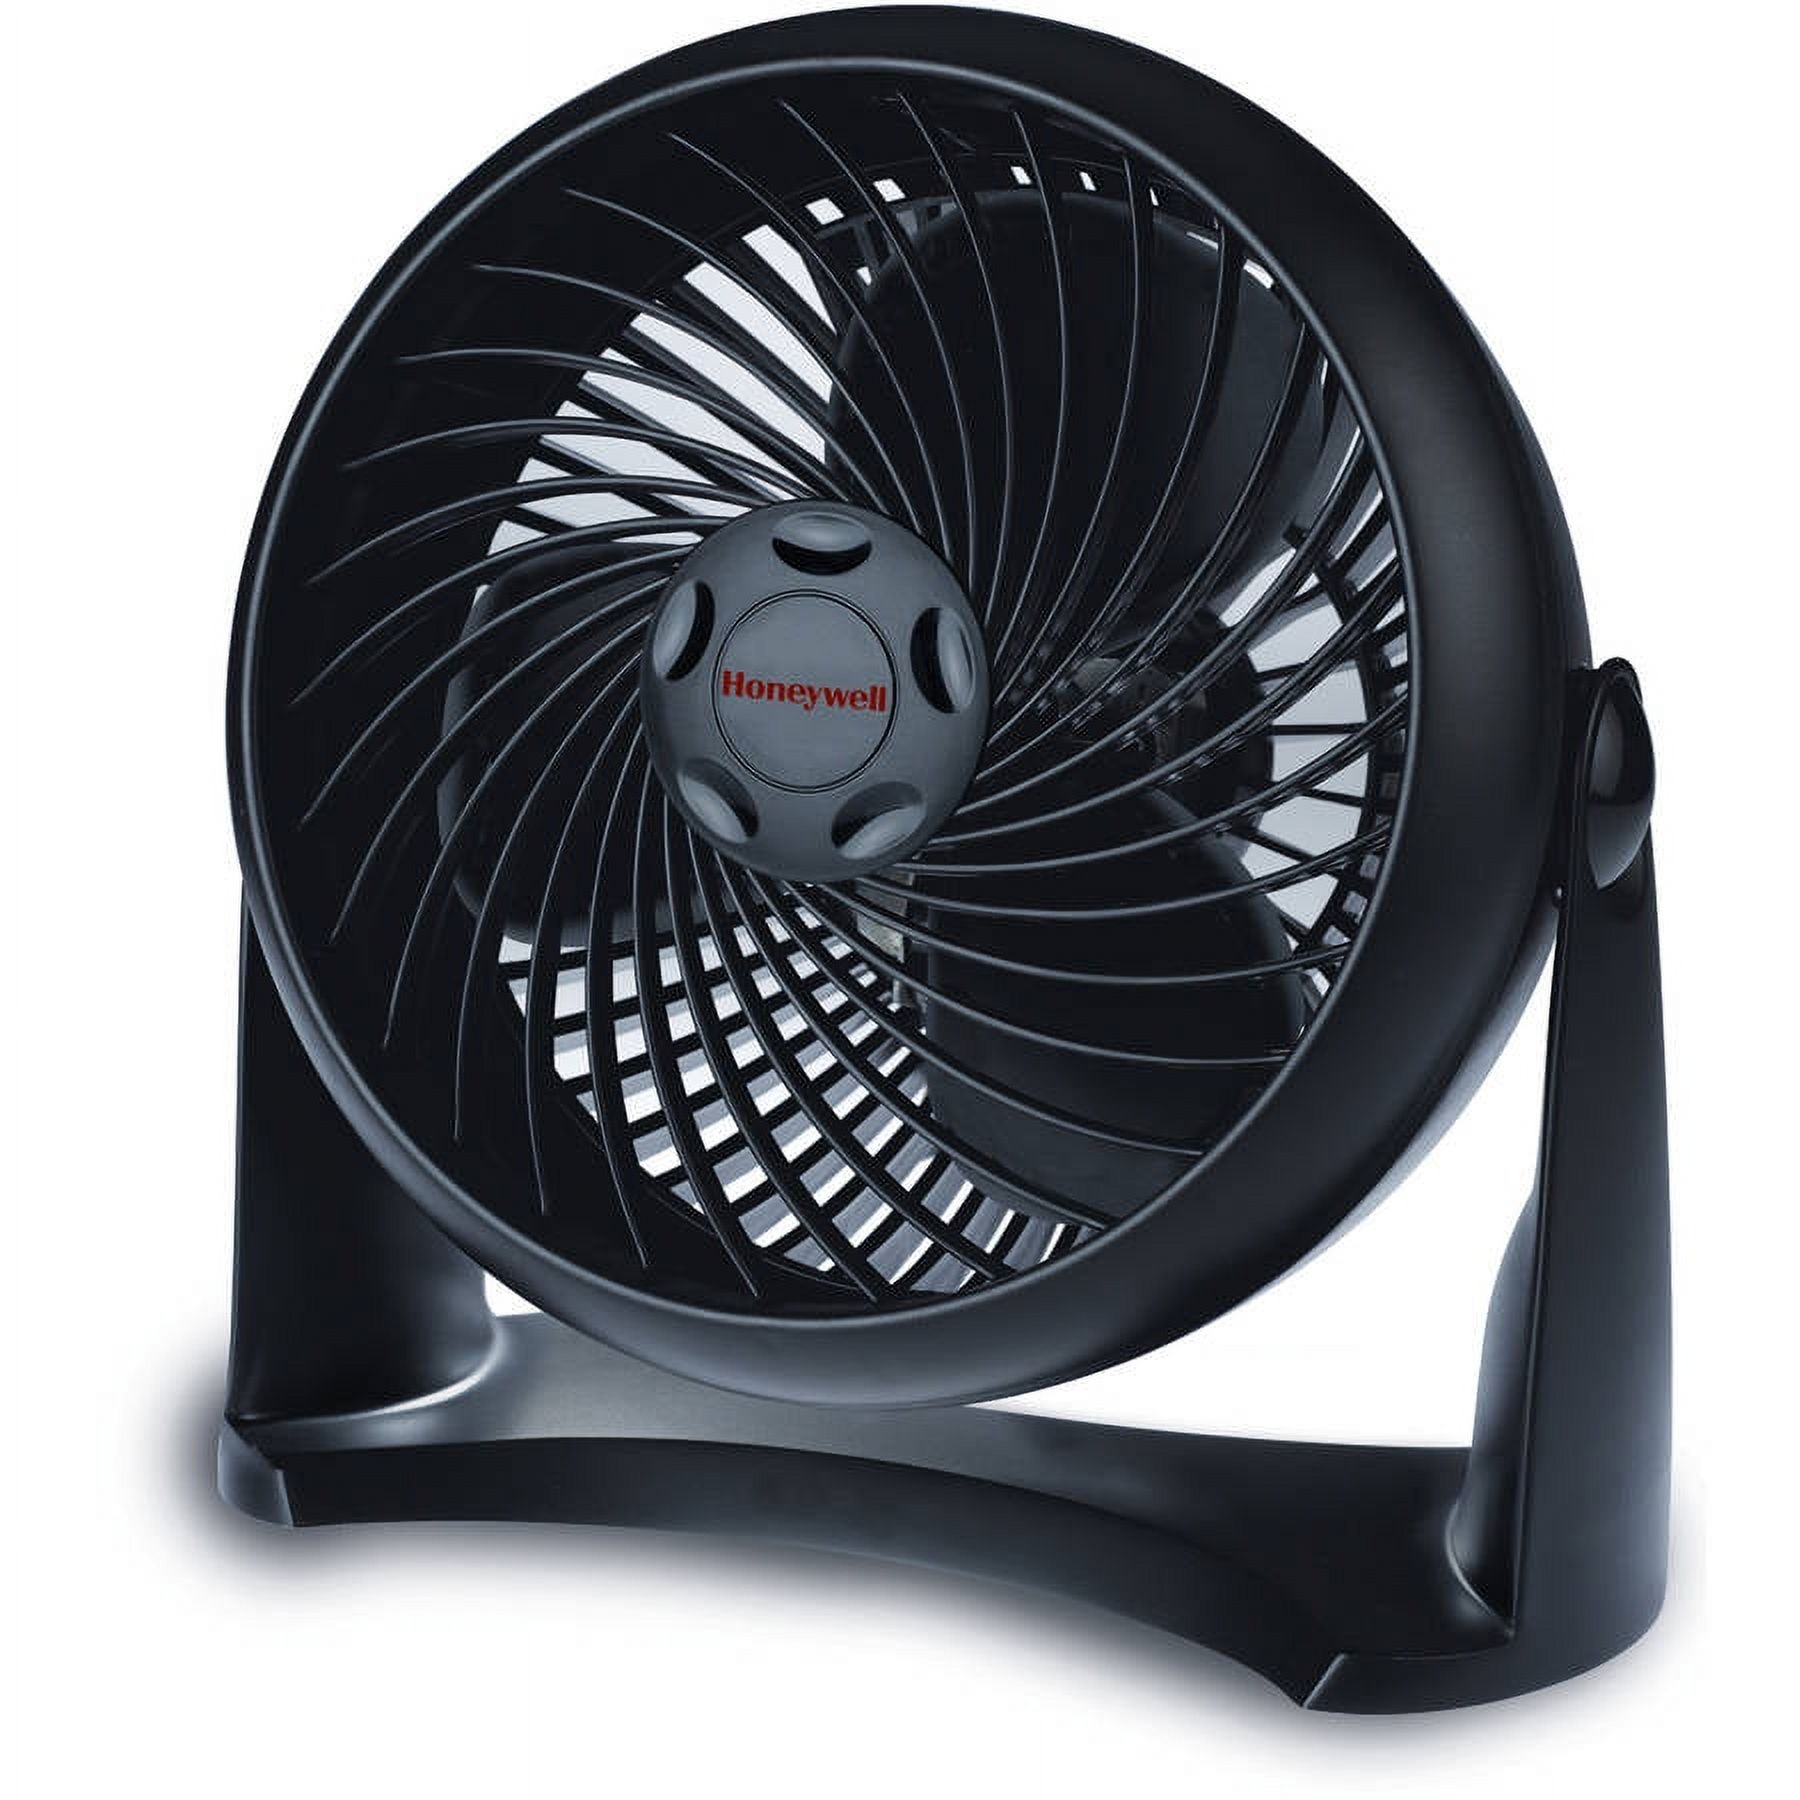 Honeywell Table Air Circulator Fan, HT-900, Black - image 1 of 6